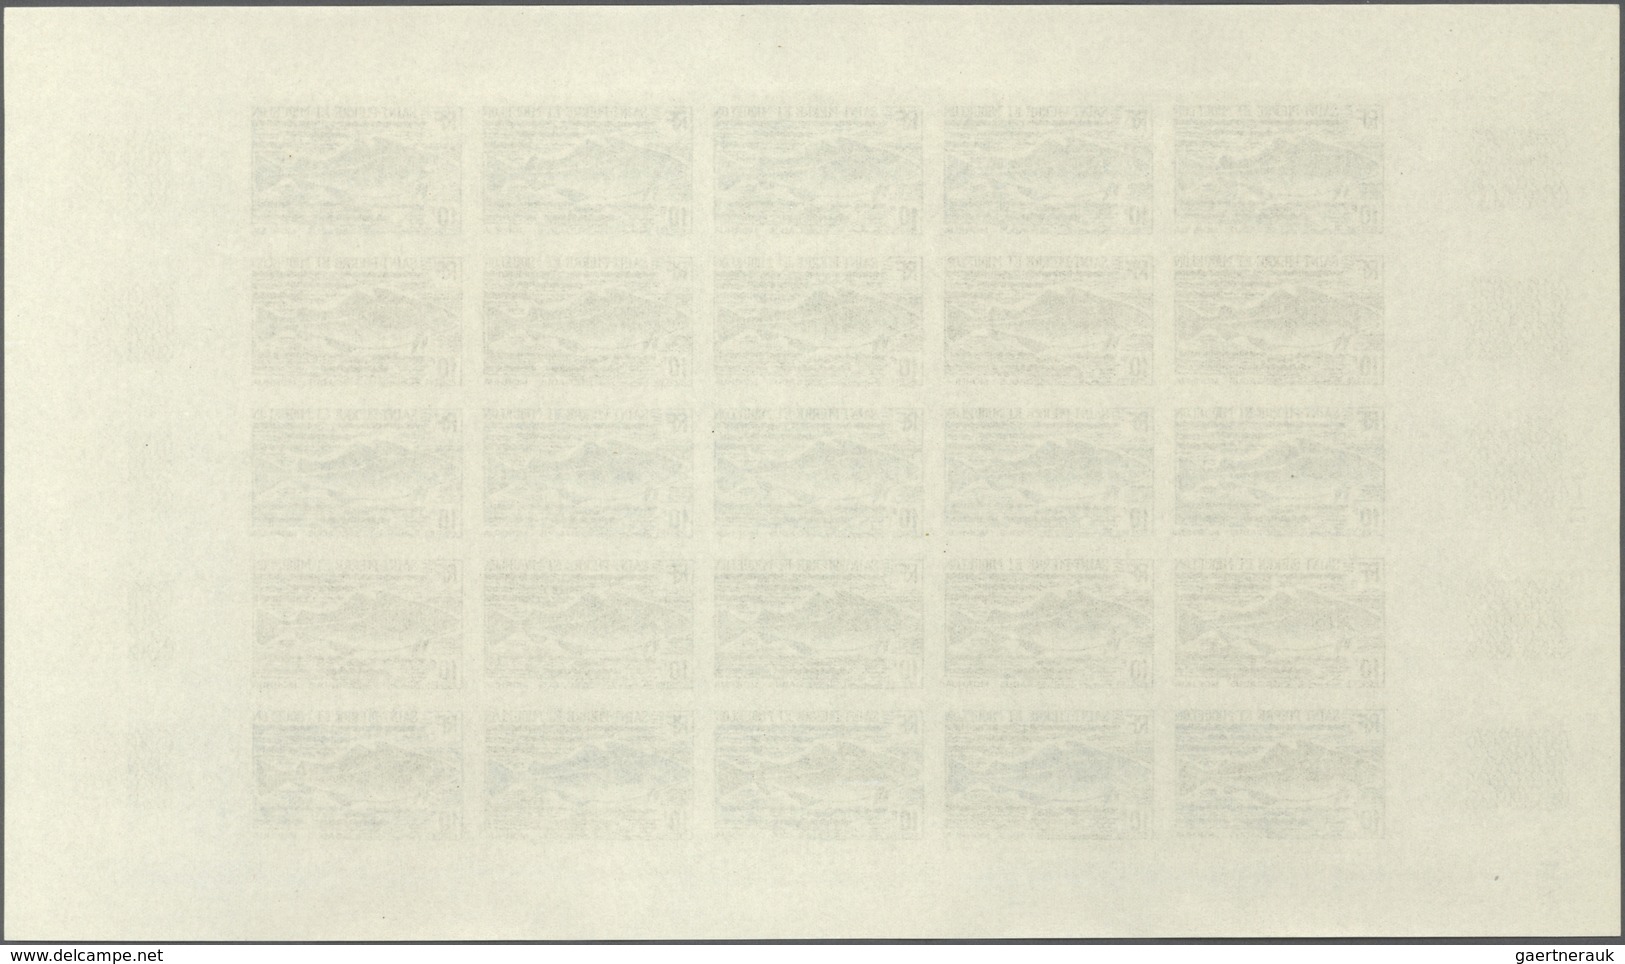 St. Pierre und Miquelon: 1972. Complete set FISH (4 values) in 4 color proof sheets of 25 showing va